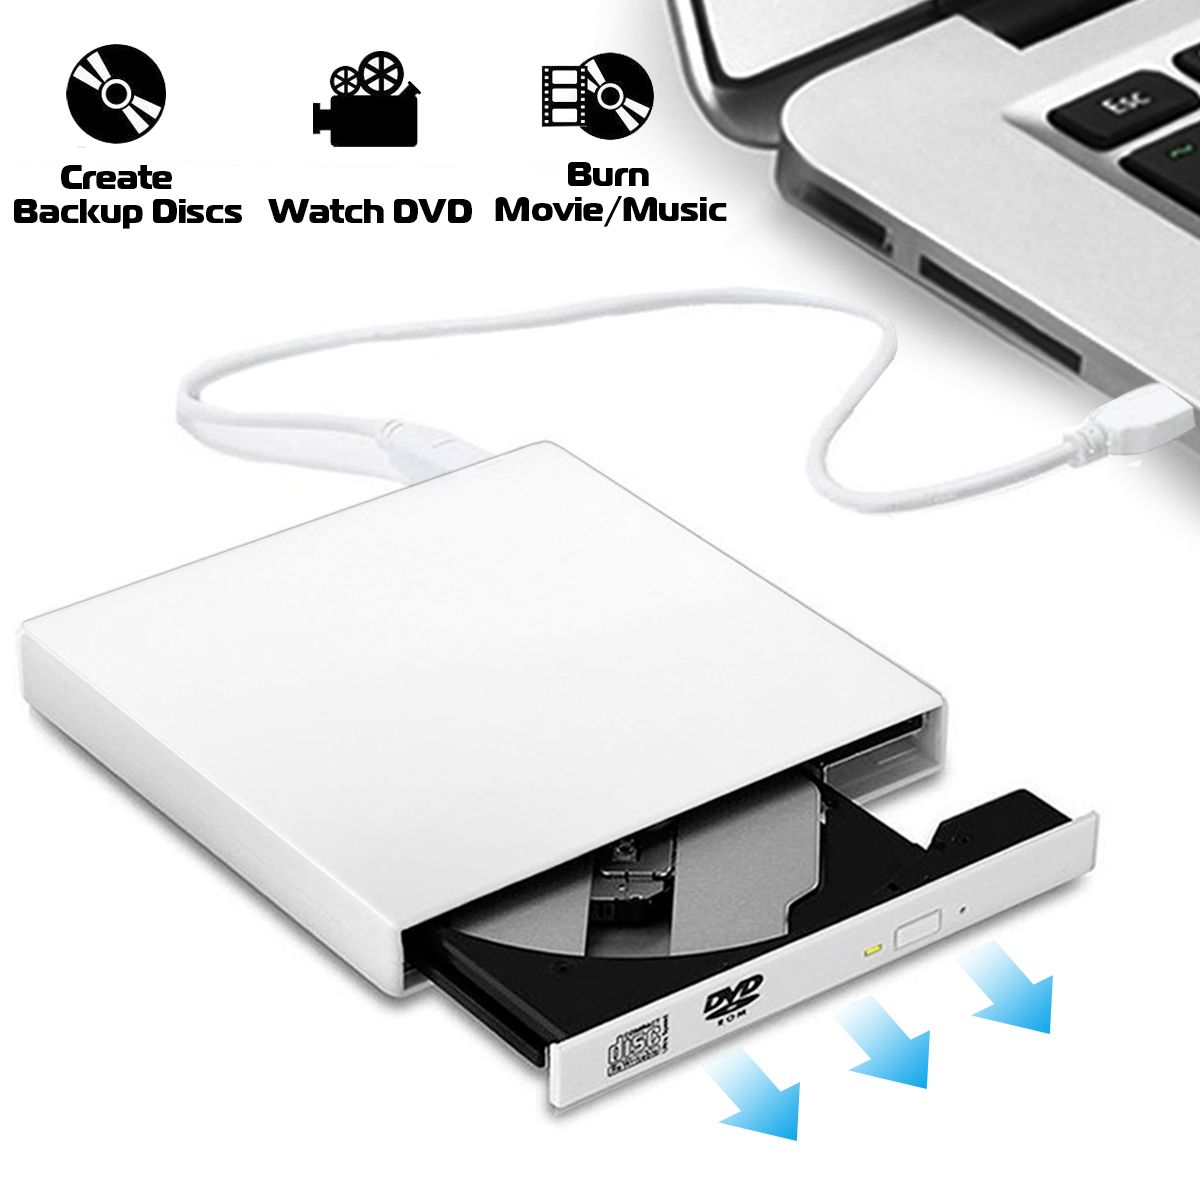 USB-20-External-Combo-Optical-Drive-CDDVD-Player-Burner-for-PC-947118